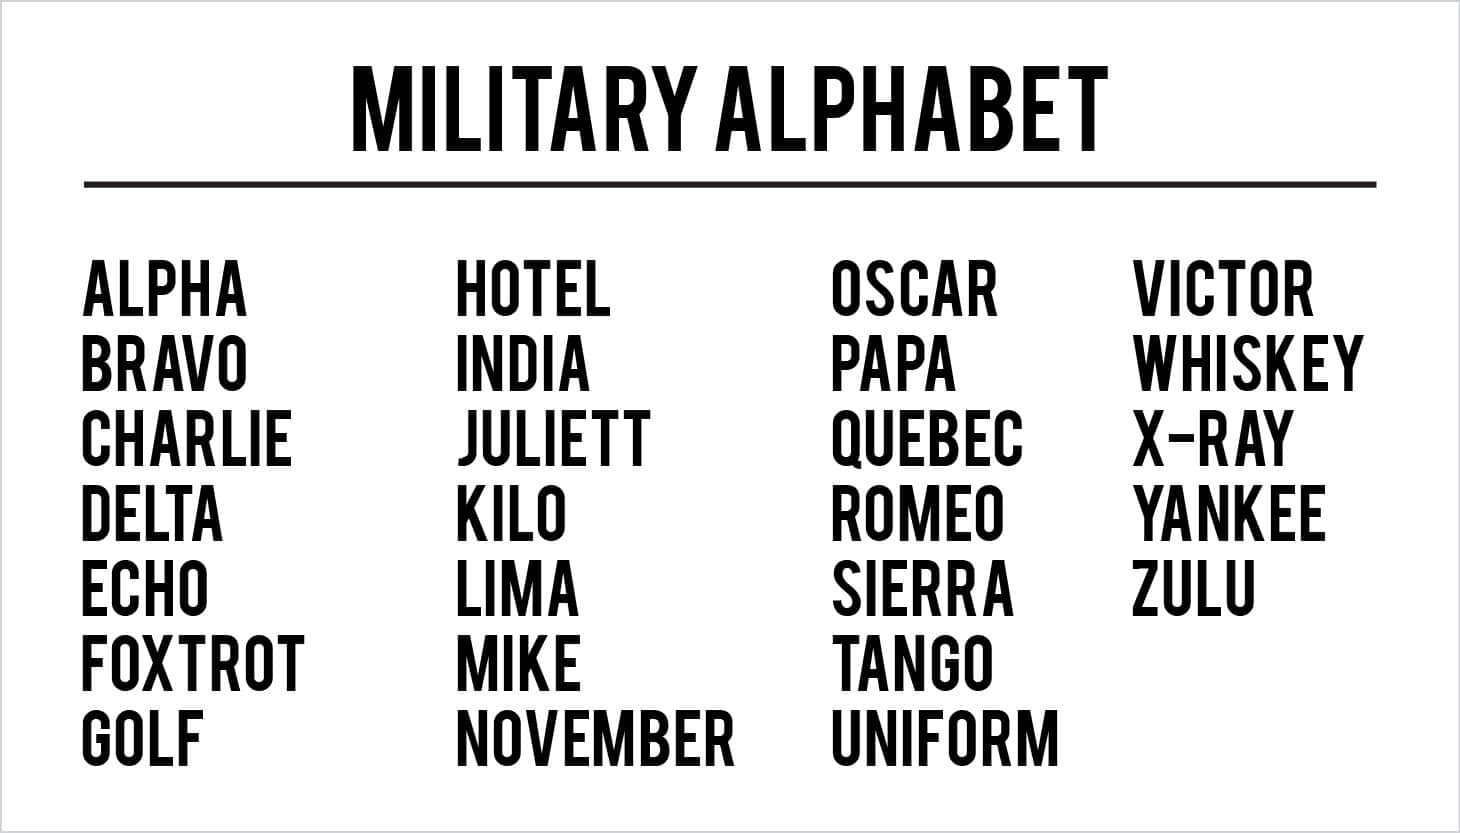 Military Alphabet Chart